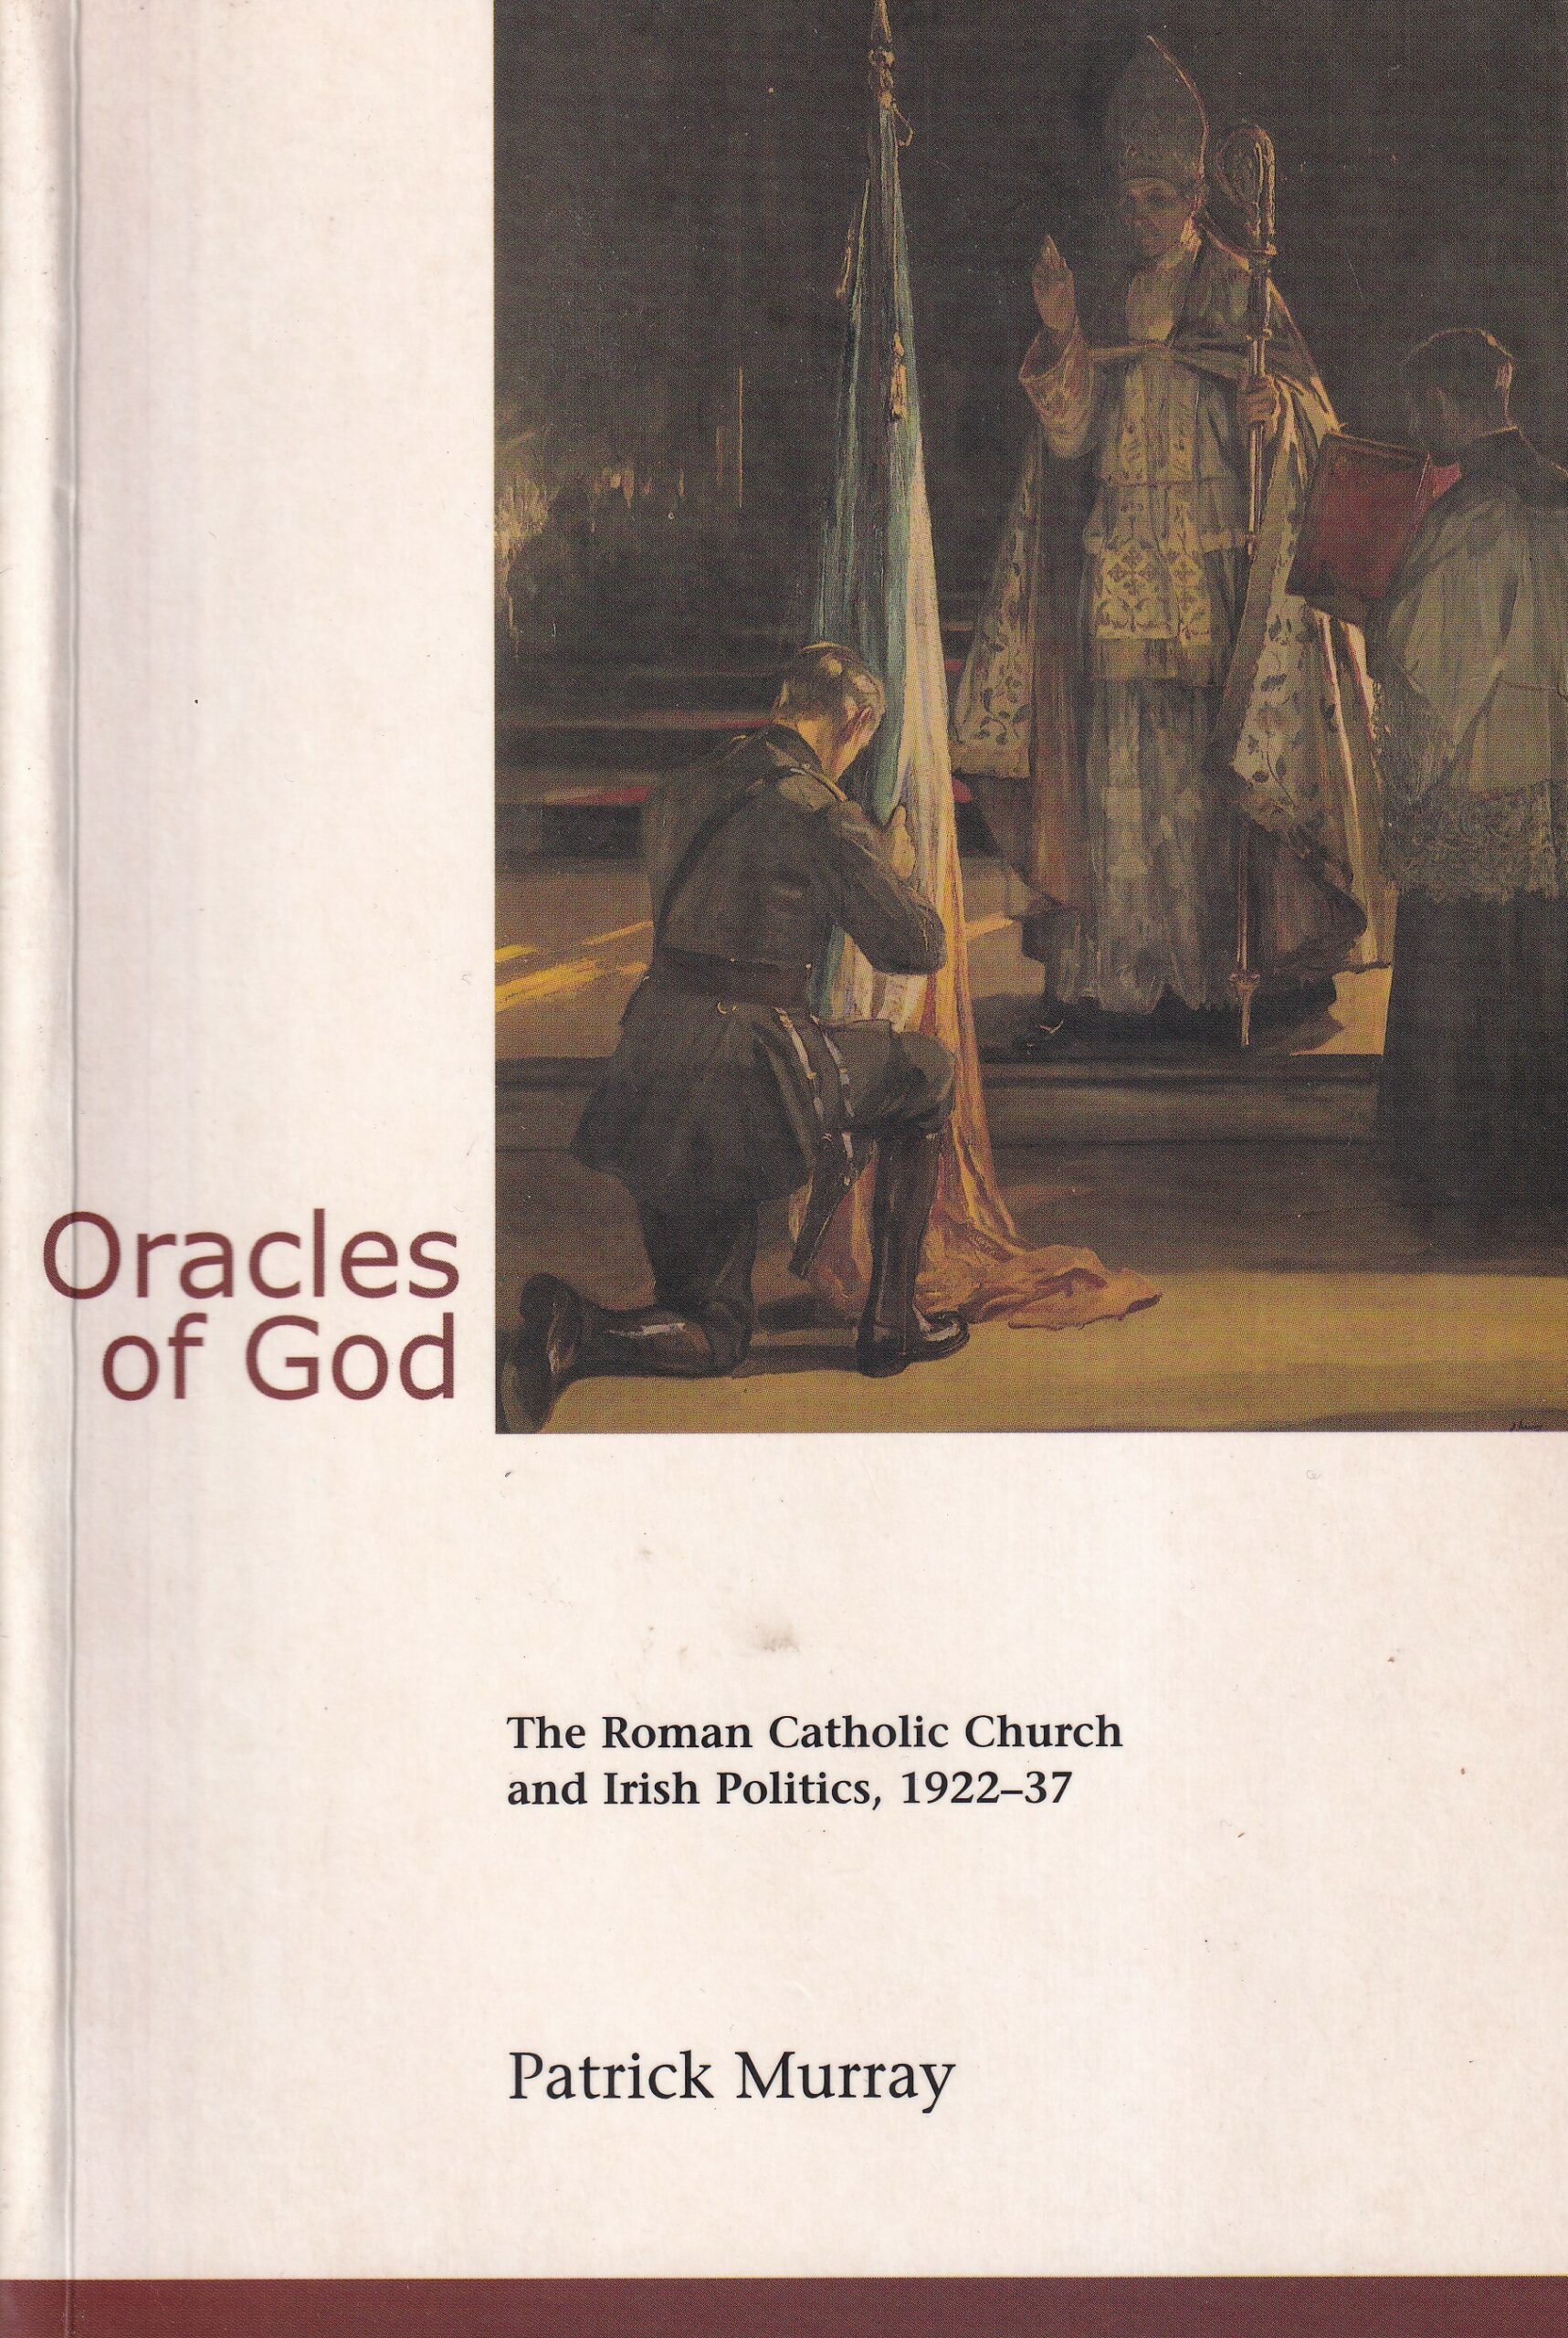 Oracles of God: The Roman Catholic Church and Irish Politics, 1922-37 by Patrick Murray